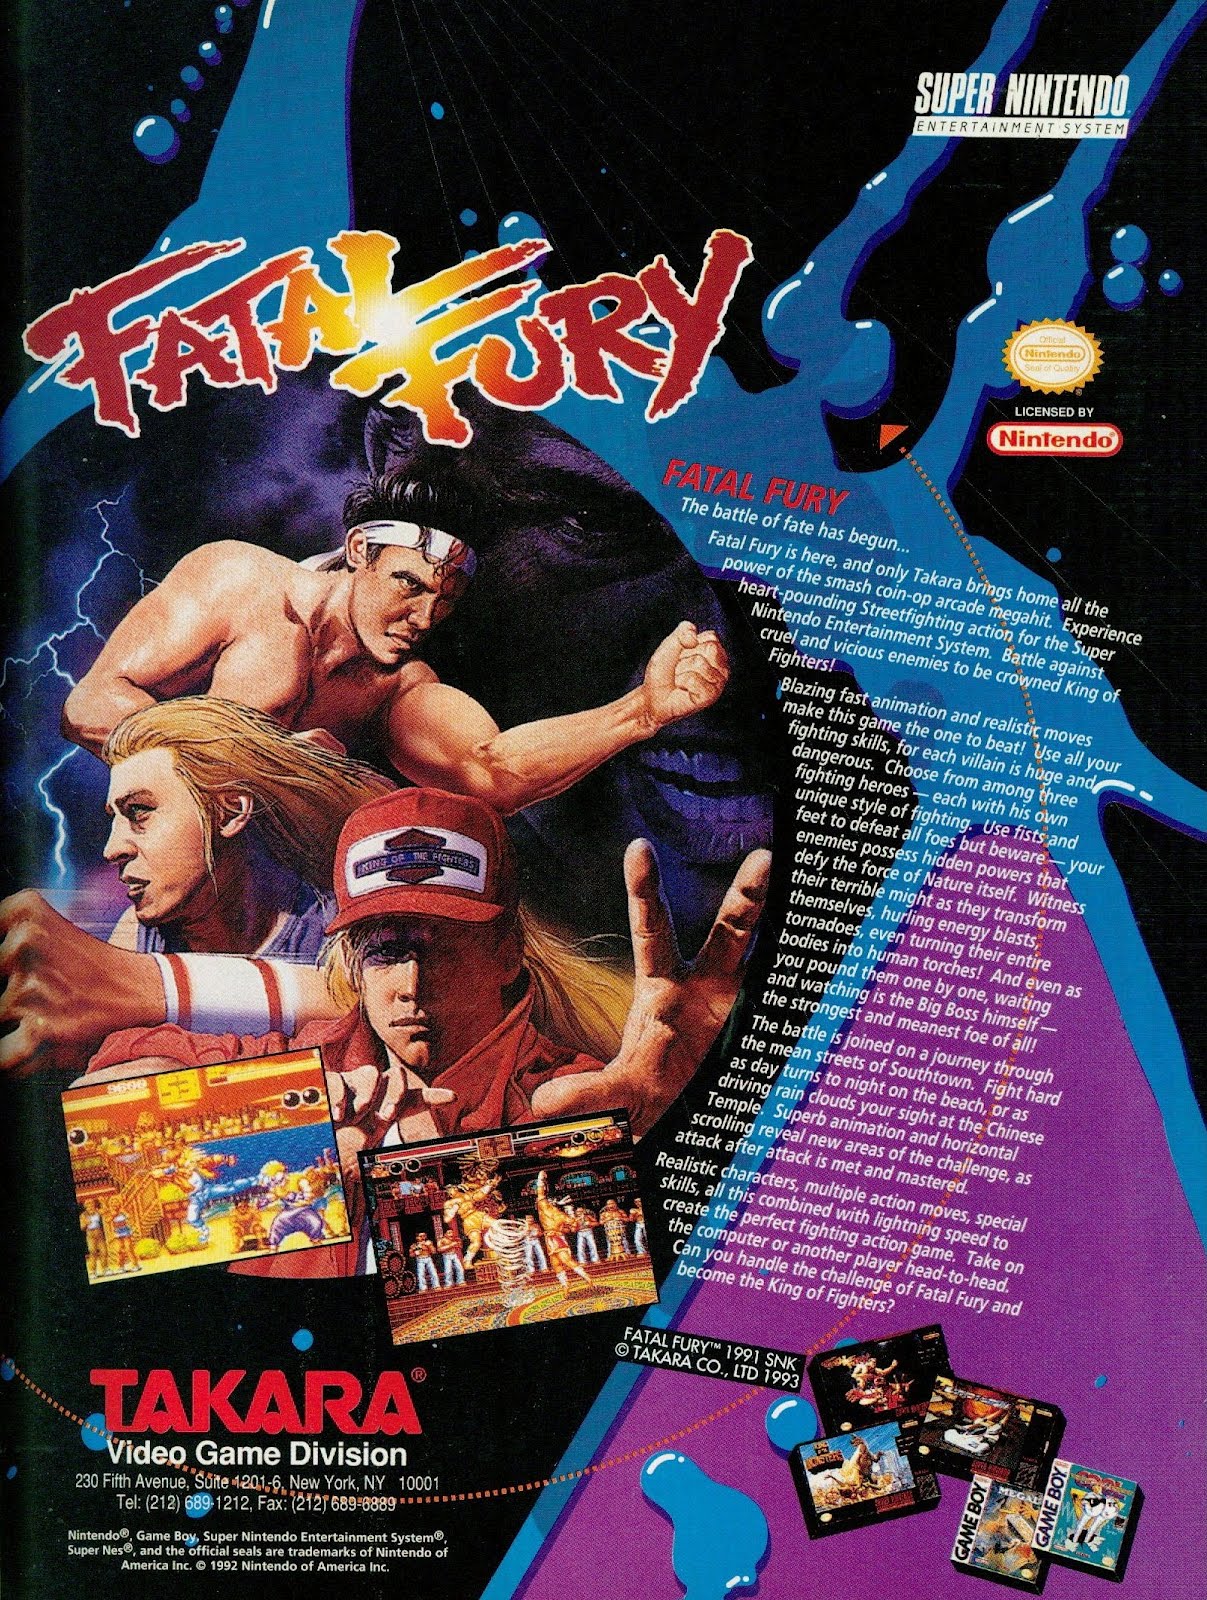 vintage gaming ads - fatal fury - Super Nintendo Male Fury h of the C op E De ar trebui Apar Hana An en bon in the We ar enim Graws Takara Video Game Division 220 mA . Hyny 1000 TH1 01352, Fax